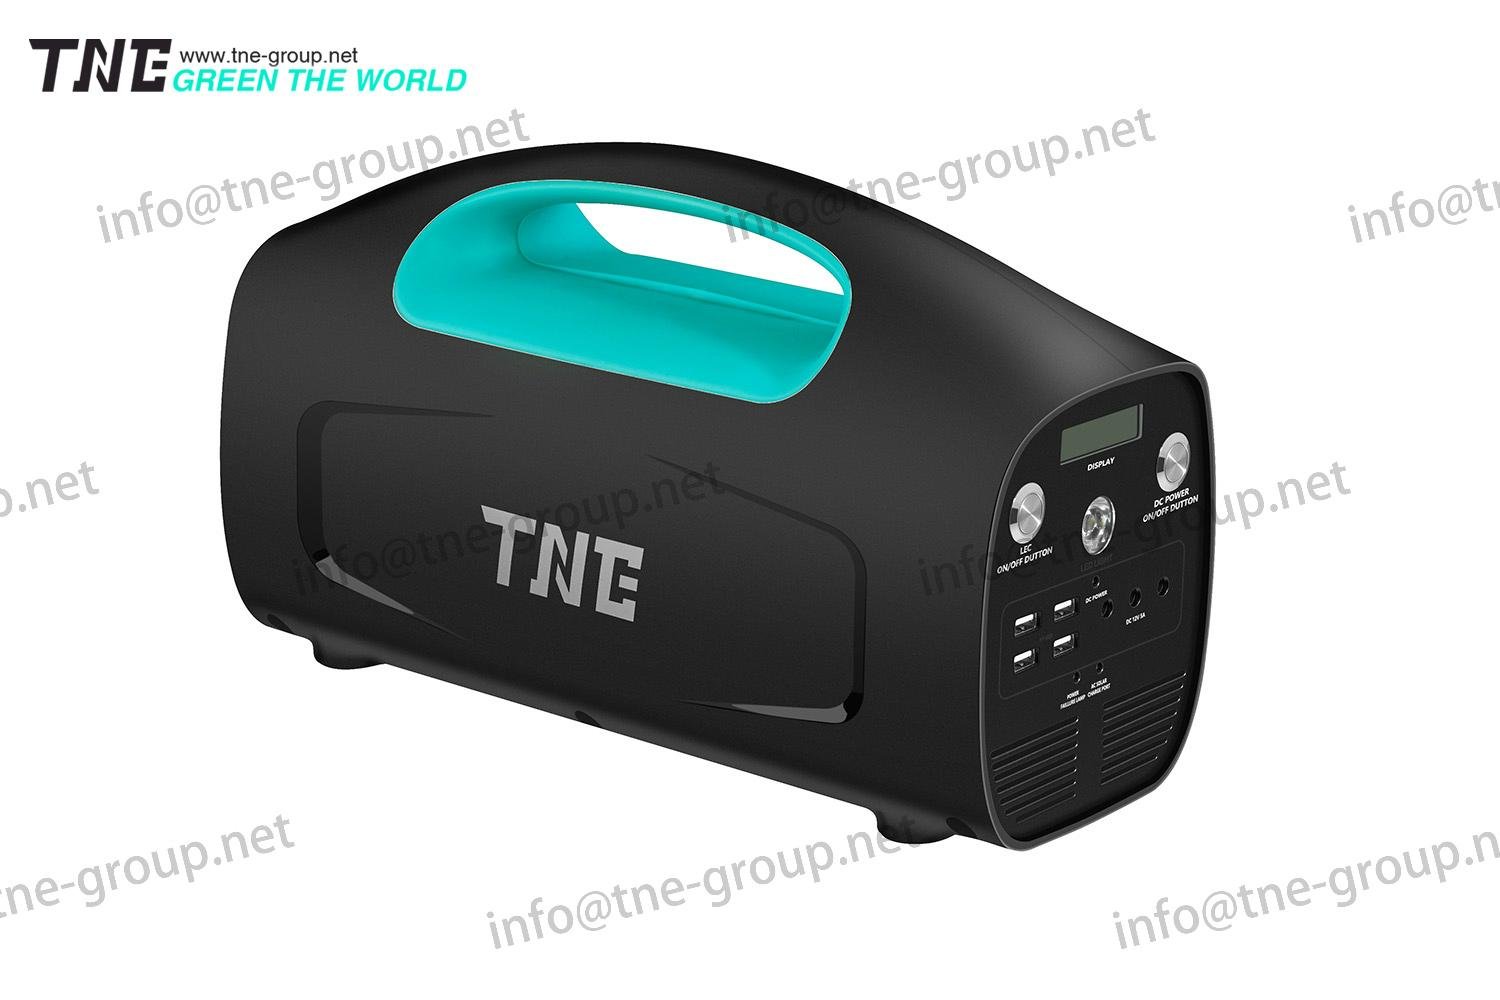 TNE smart solar online ups portable generator power bank 2